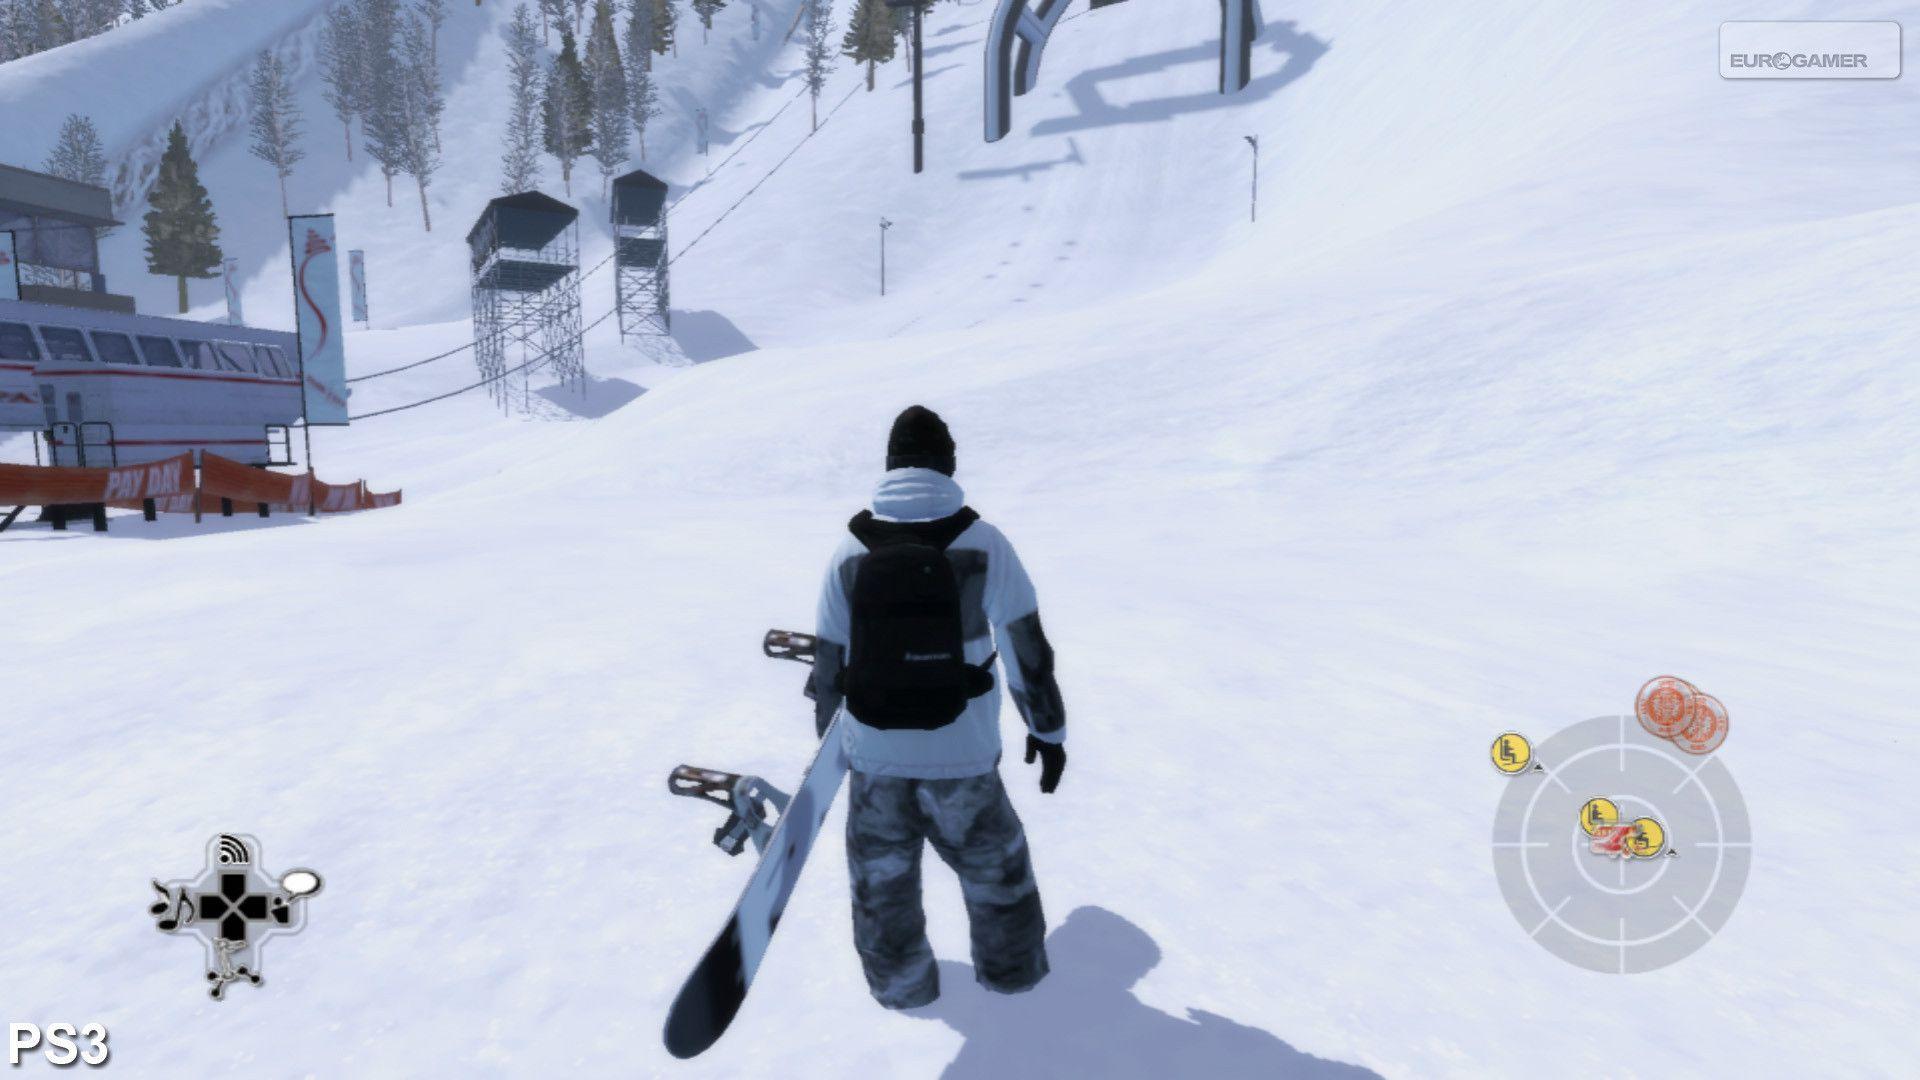 Shaun White Snowboarding 14 296237 Image HD Wallpaper. Wallfoy.com